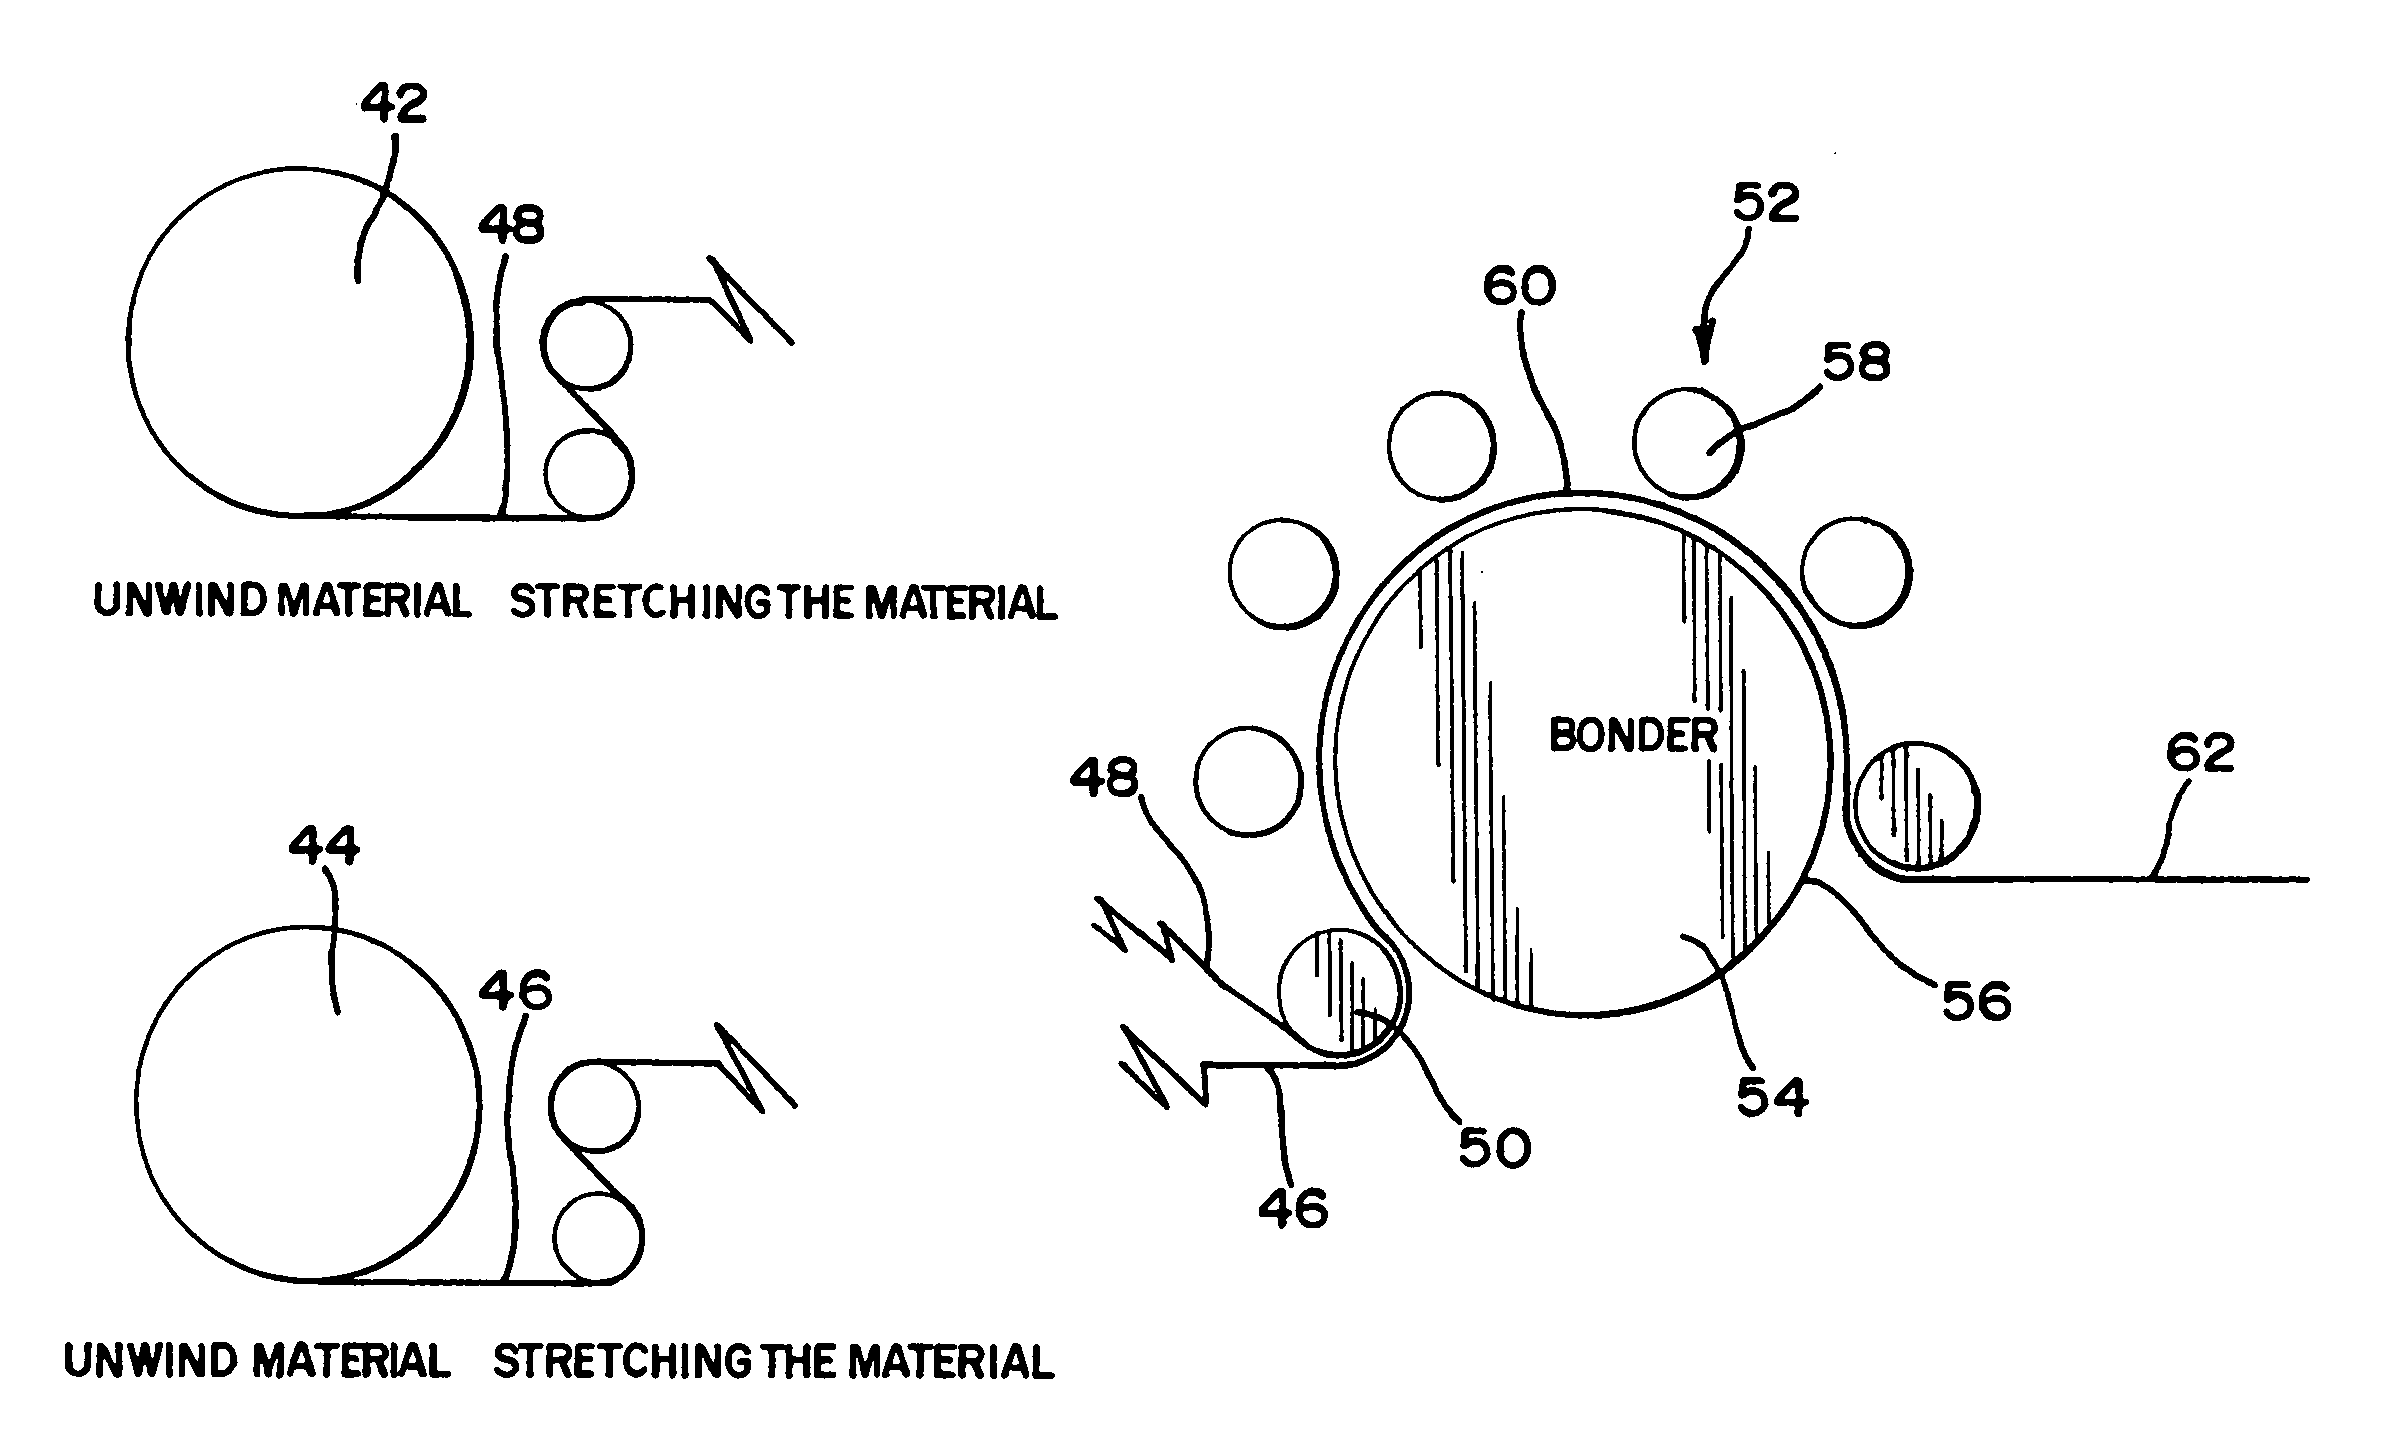 Method for improved bond strength in an elastomeric material